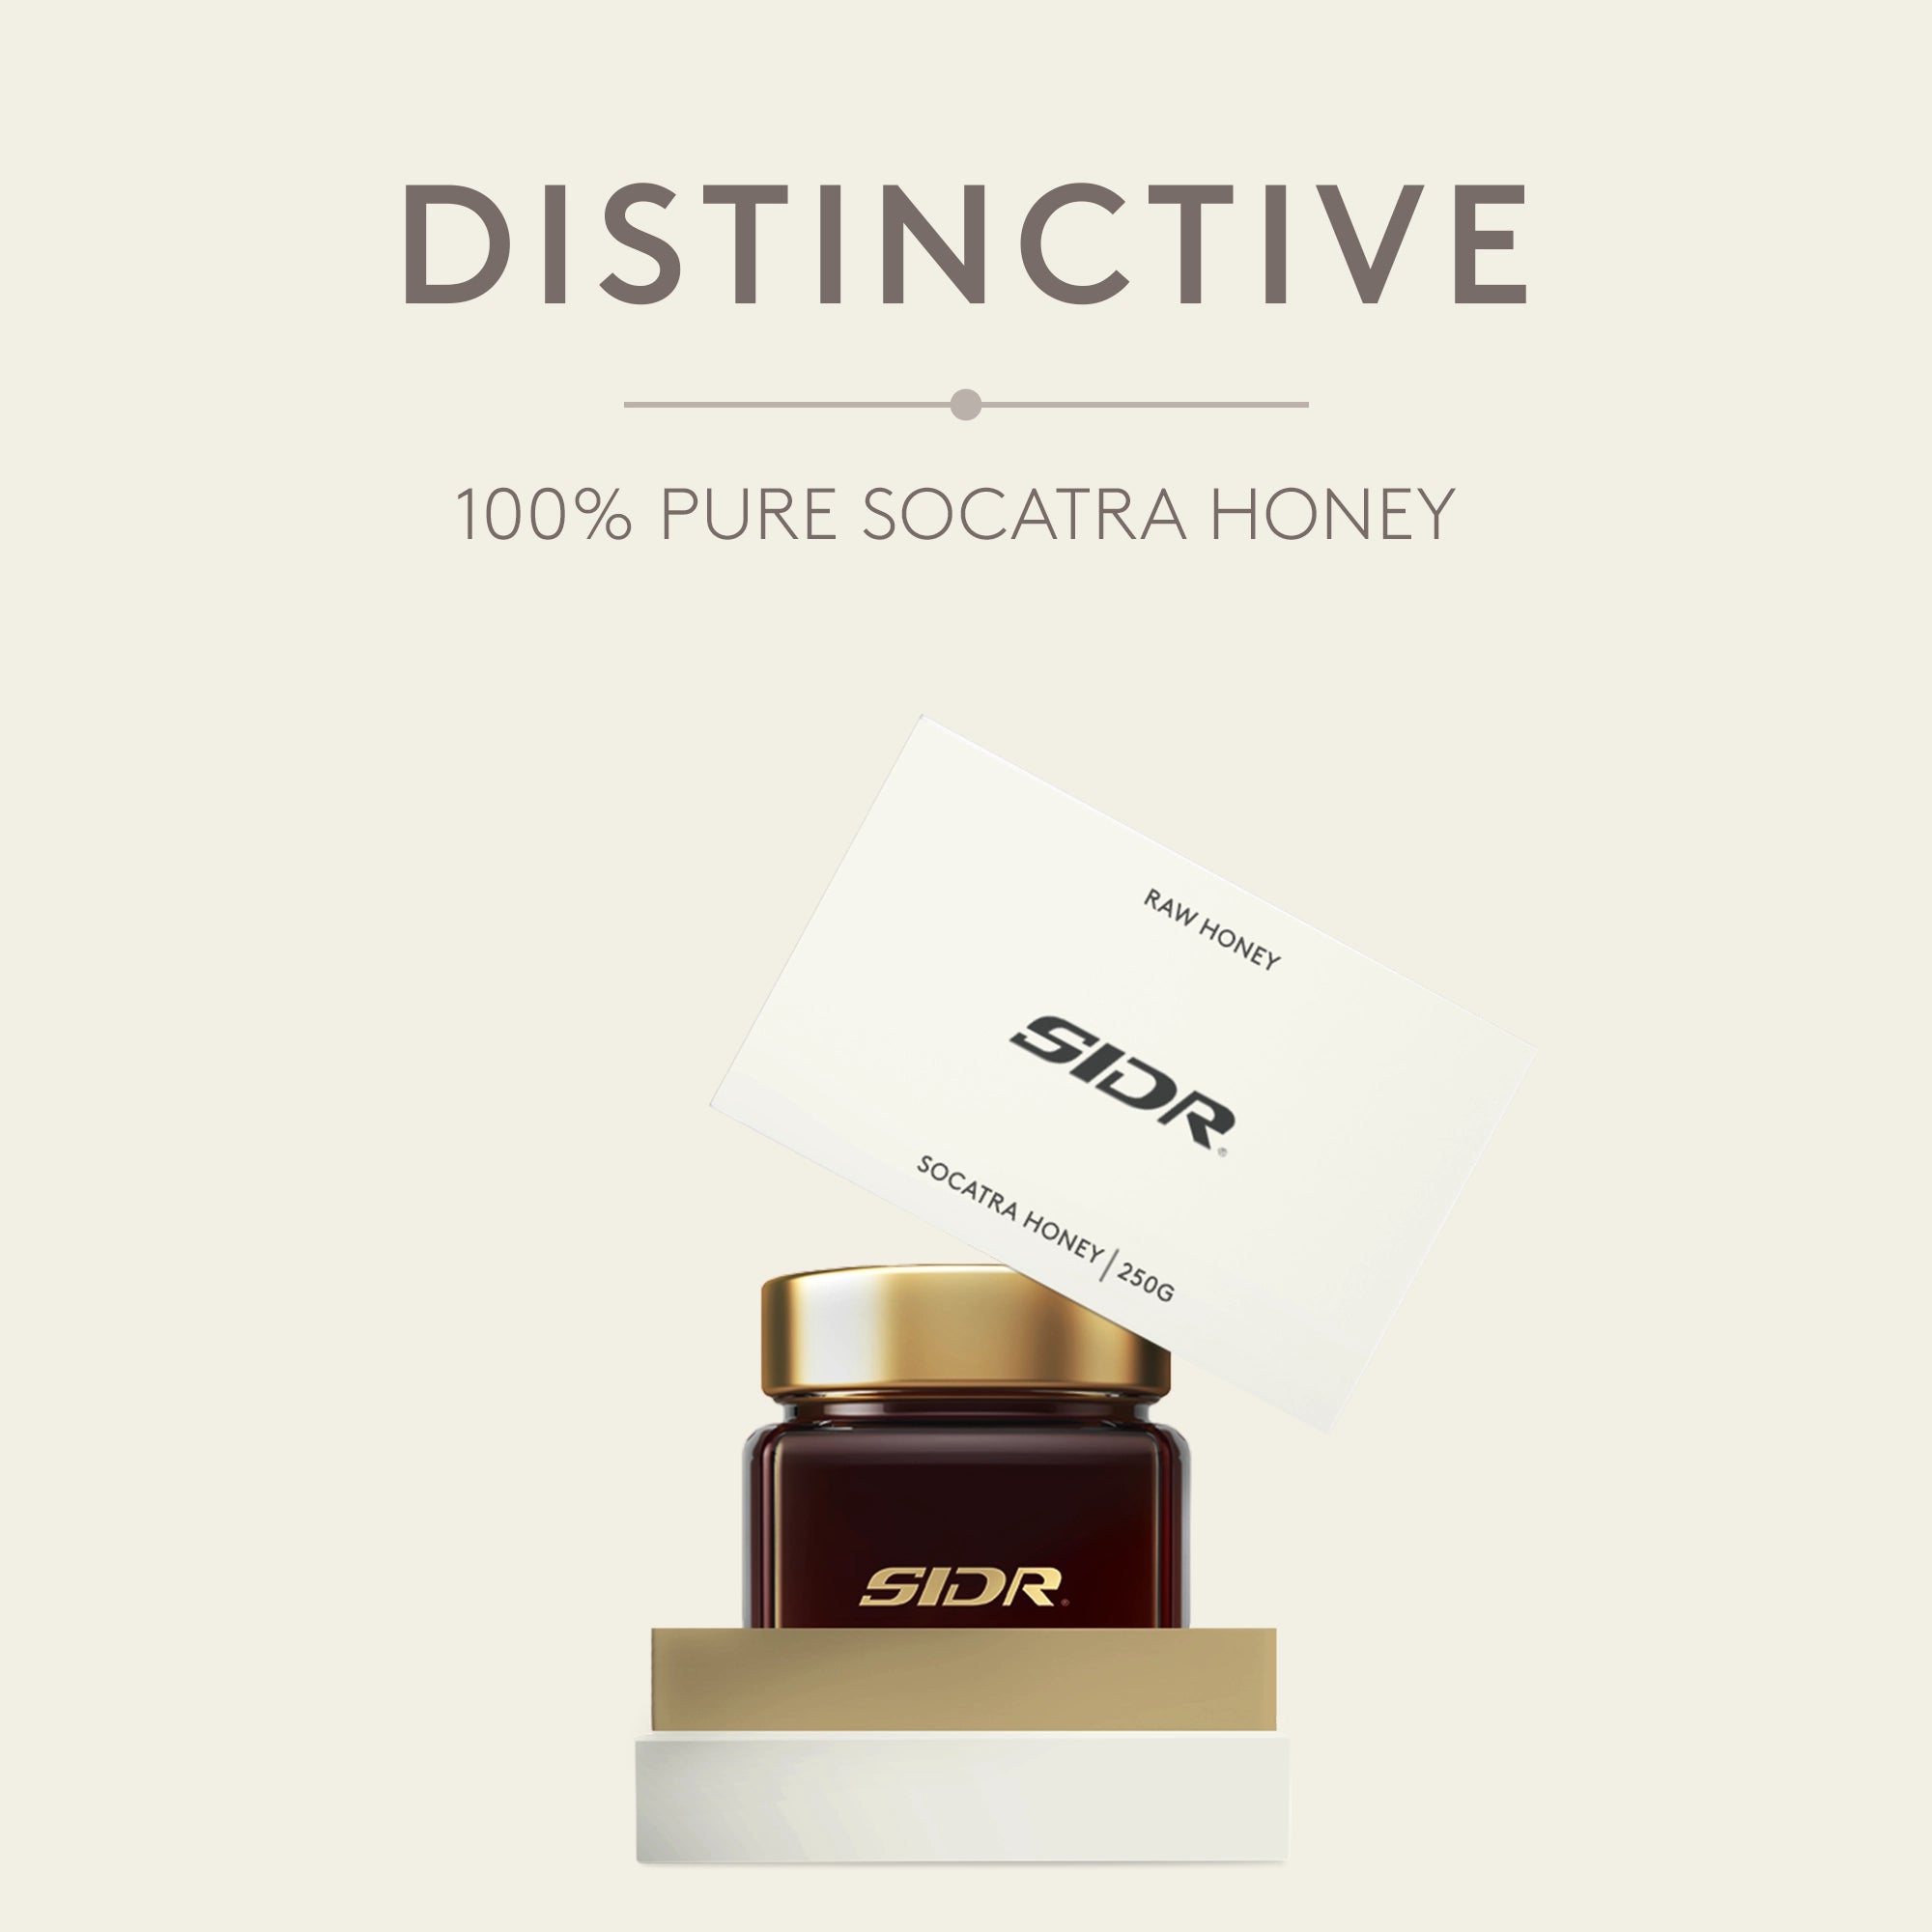 socatra honey distinctive